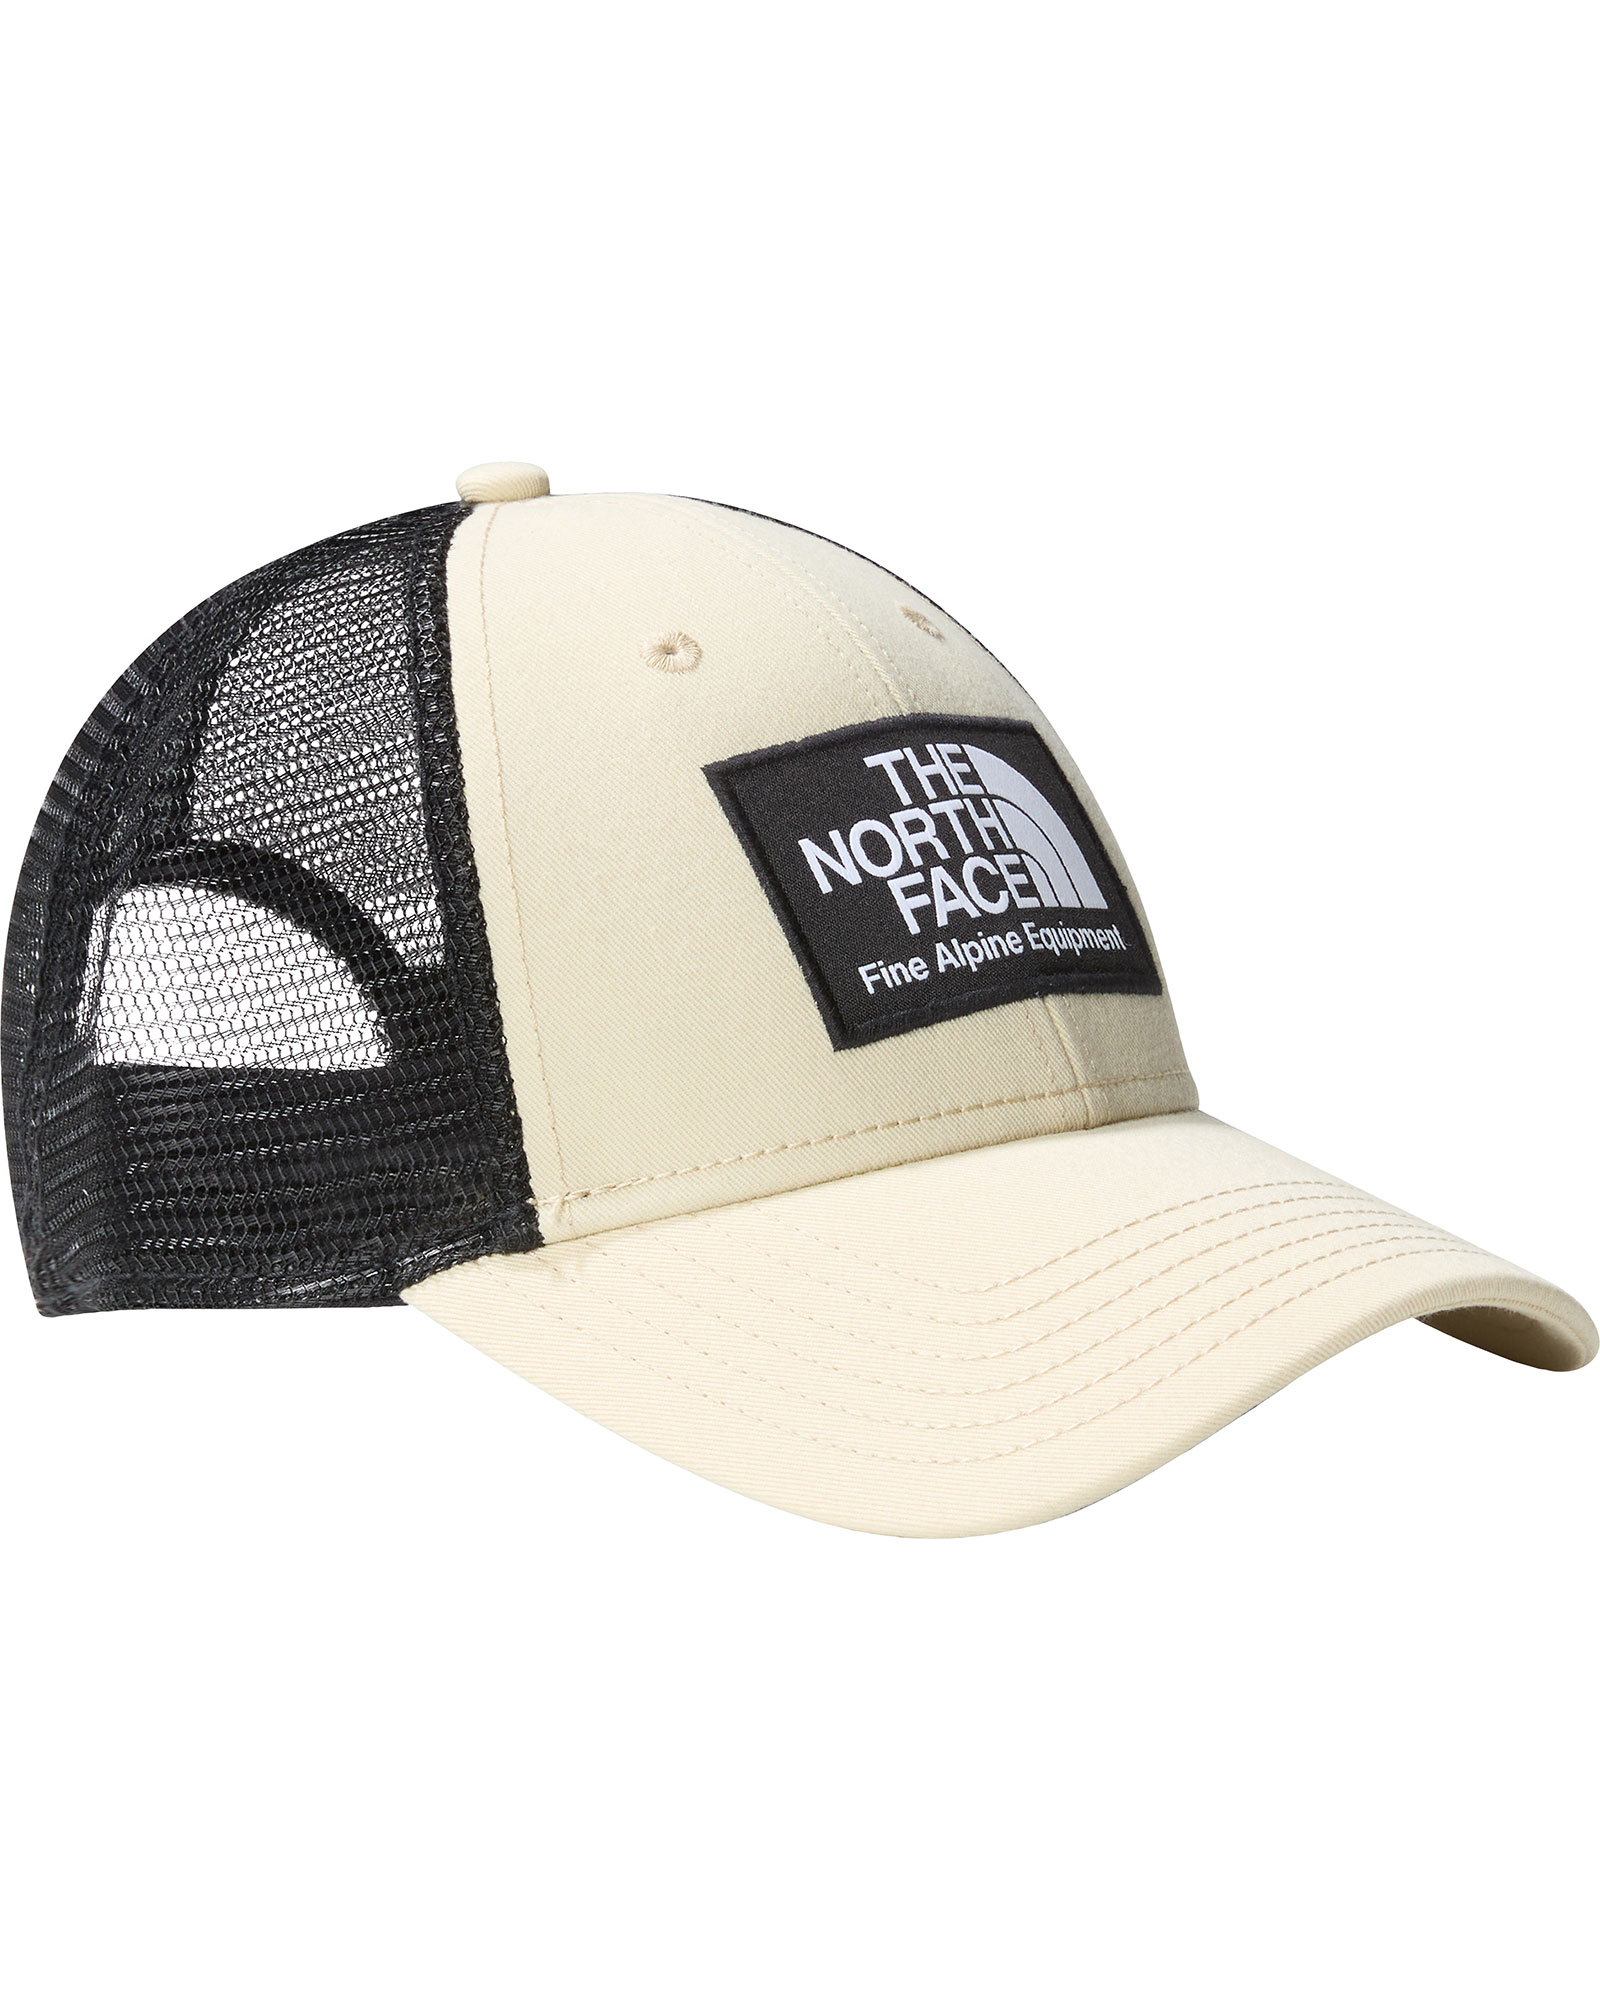 The North Face Mudder Trucker Hat - Gravel